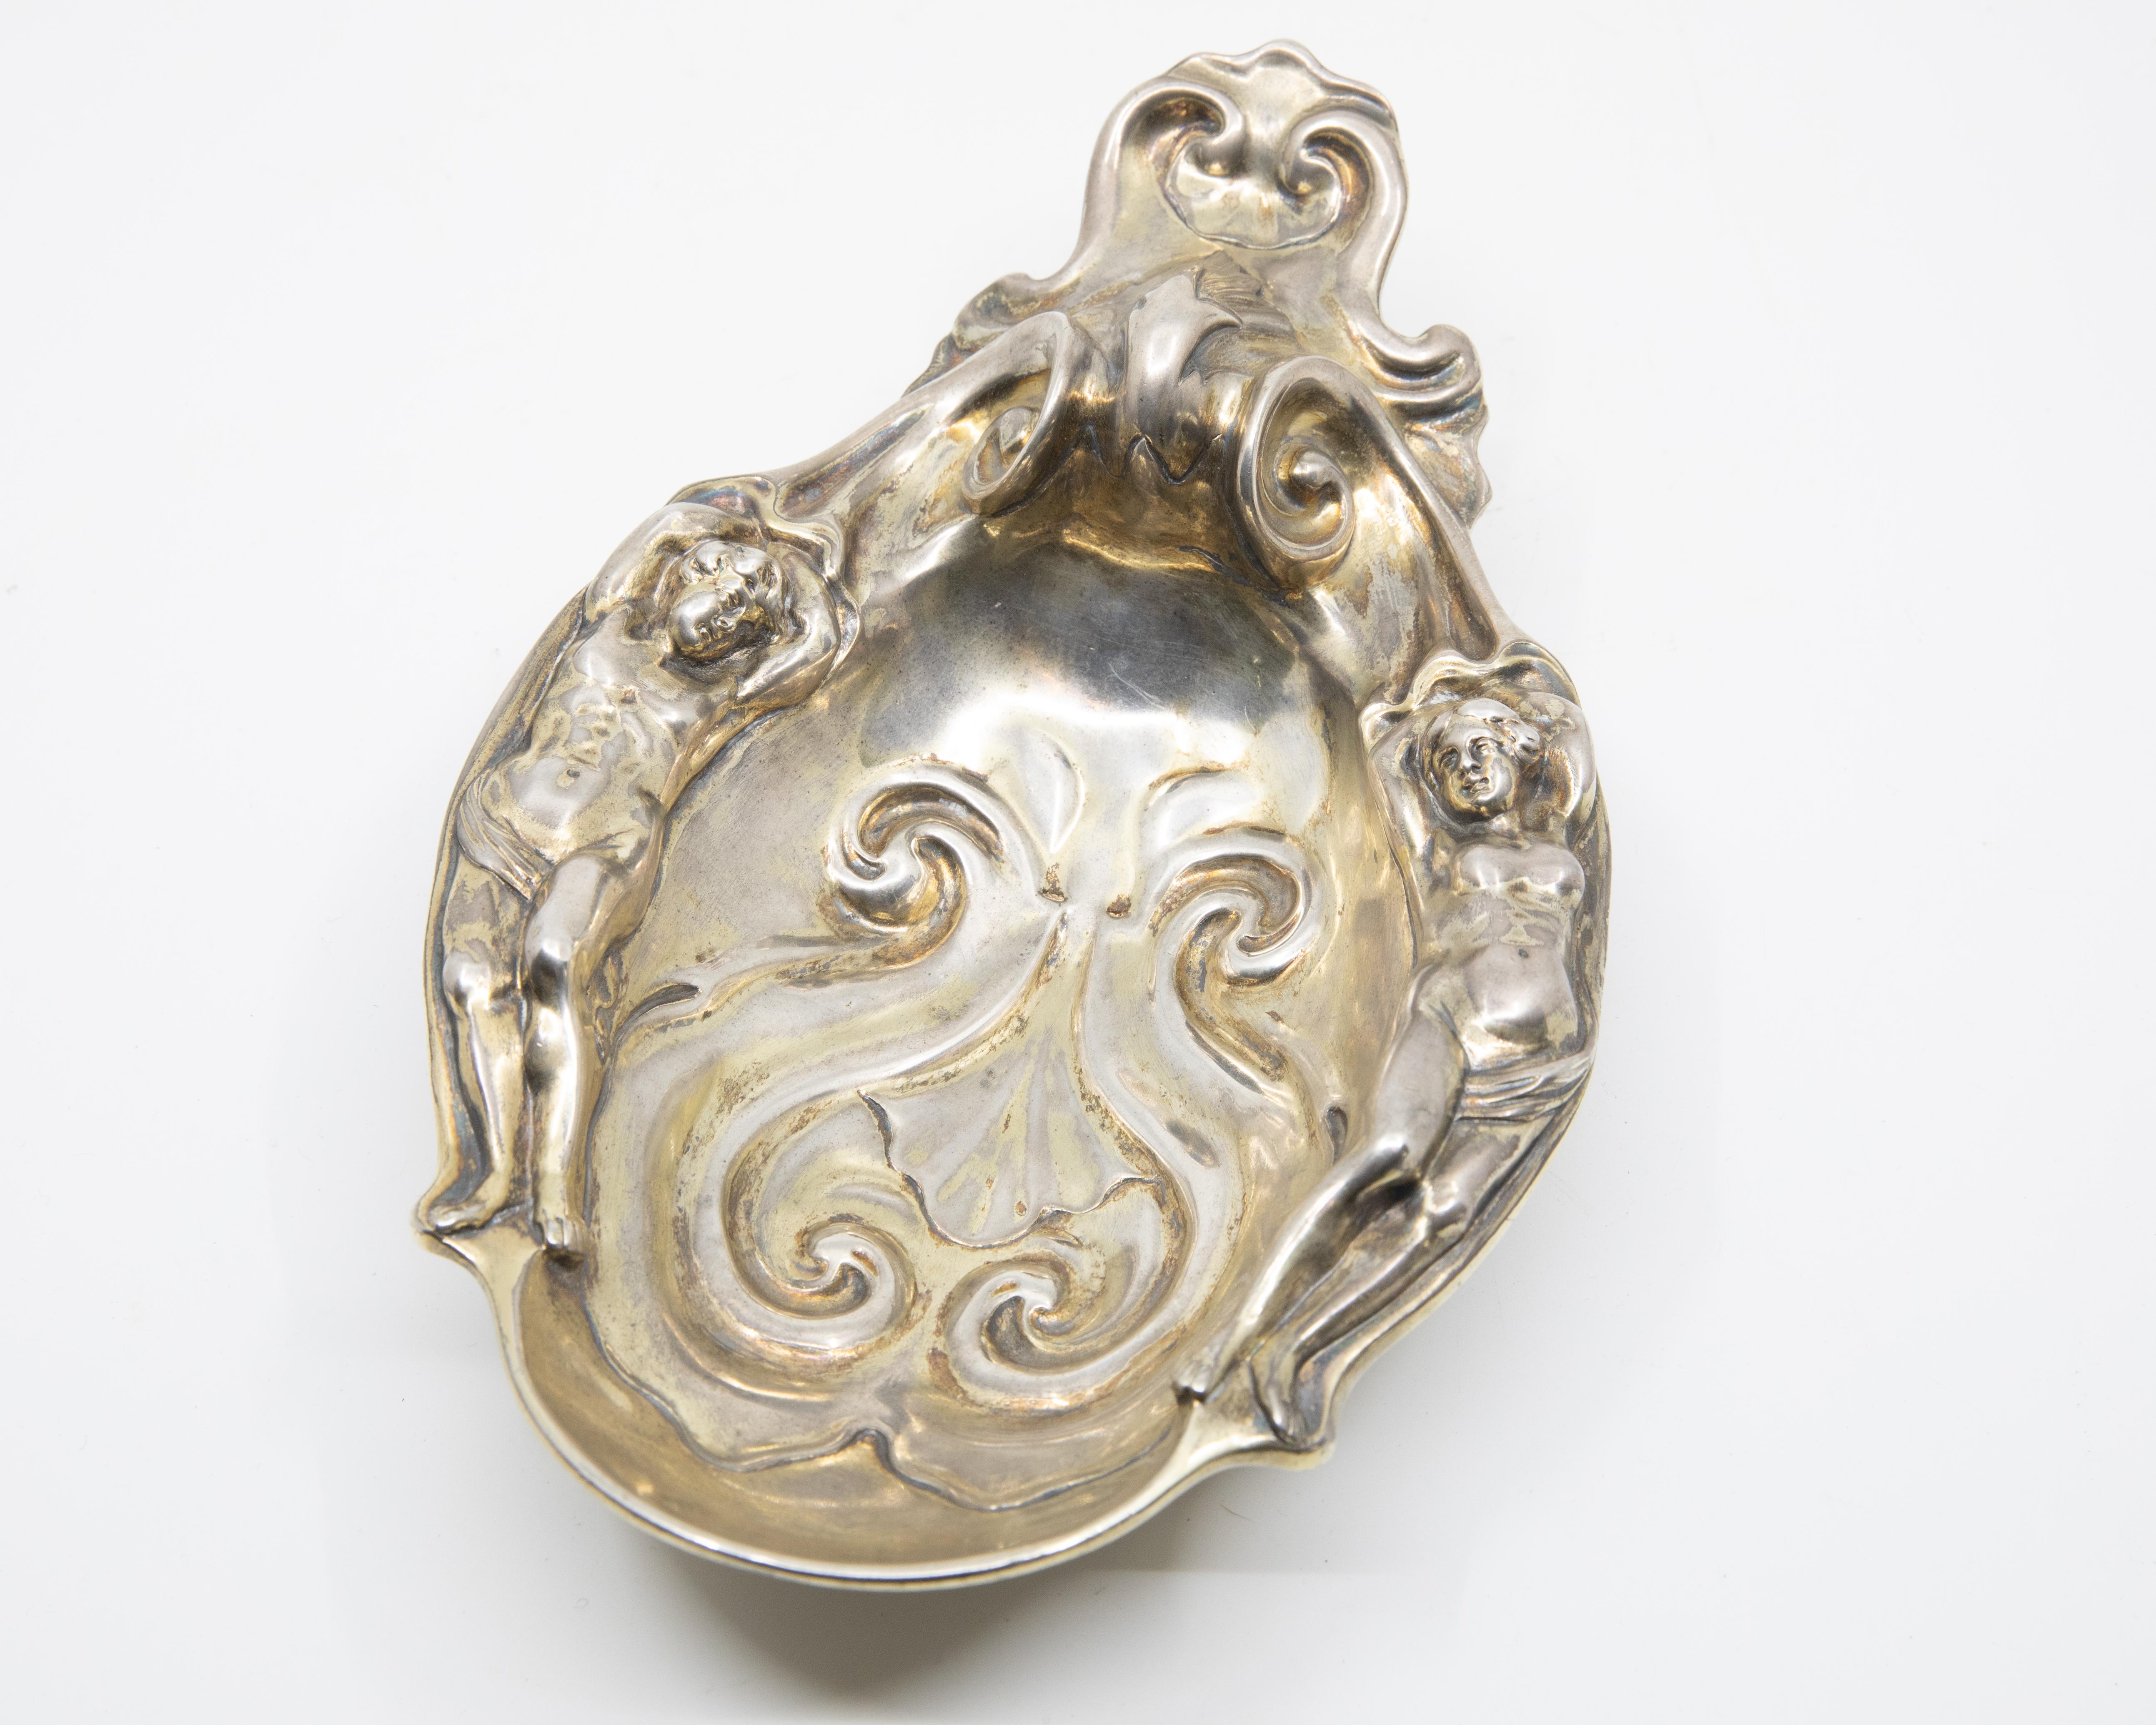 Robert Garrard Figural Renaissance Revival Decorated Sterling Silver Dish 1